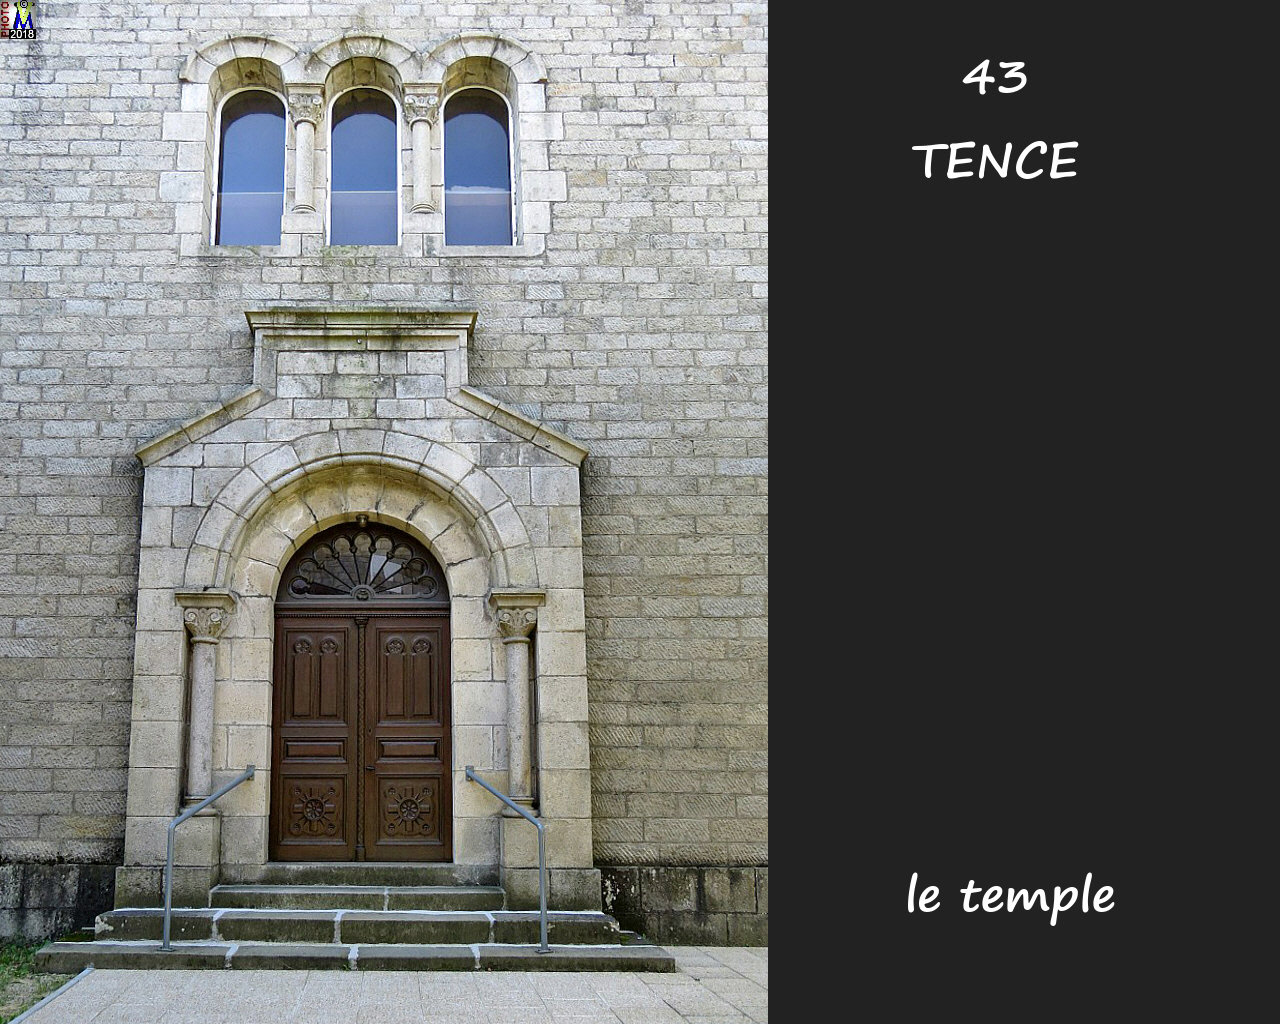 43TENCE_temple_102.jpg